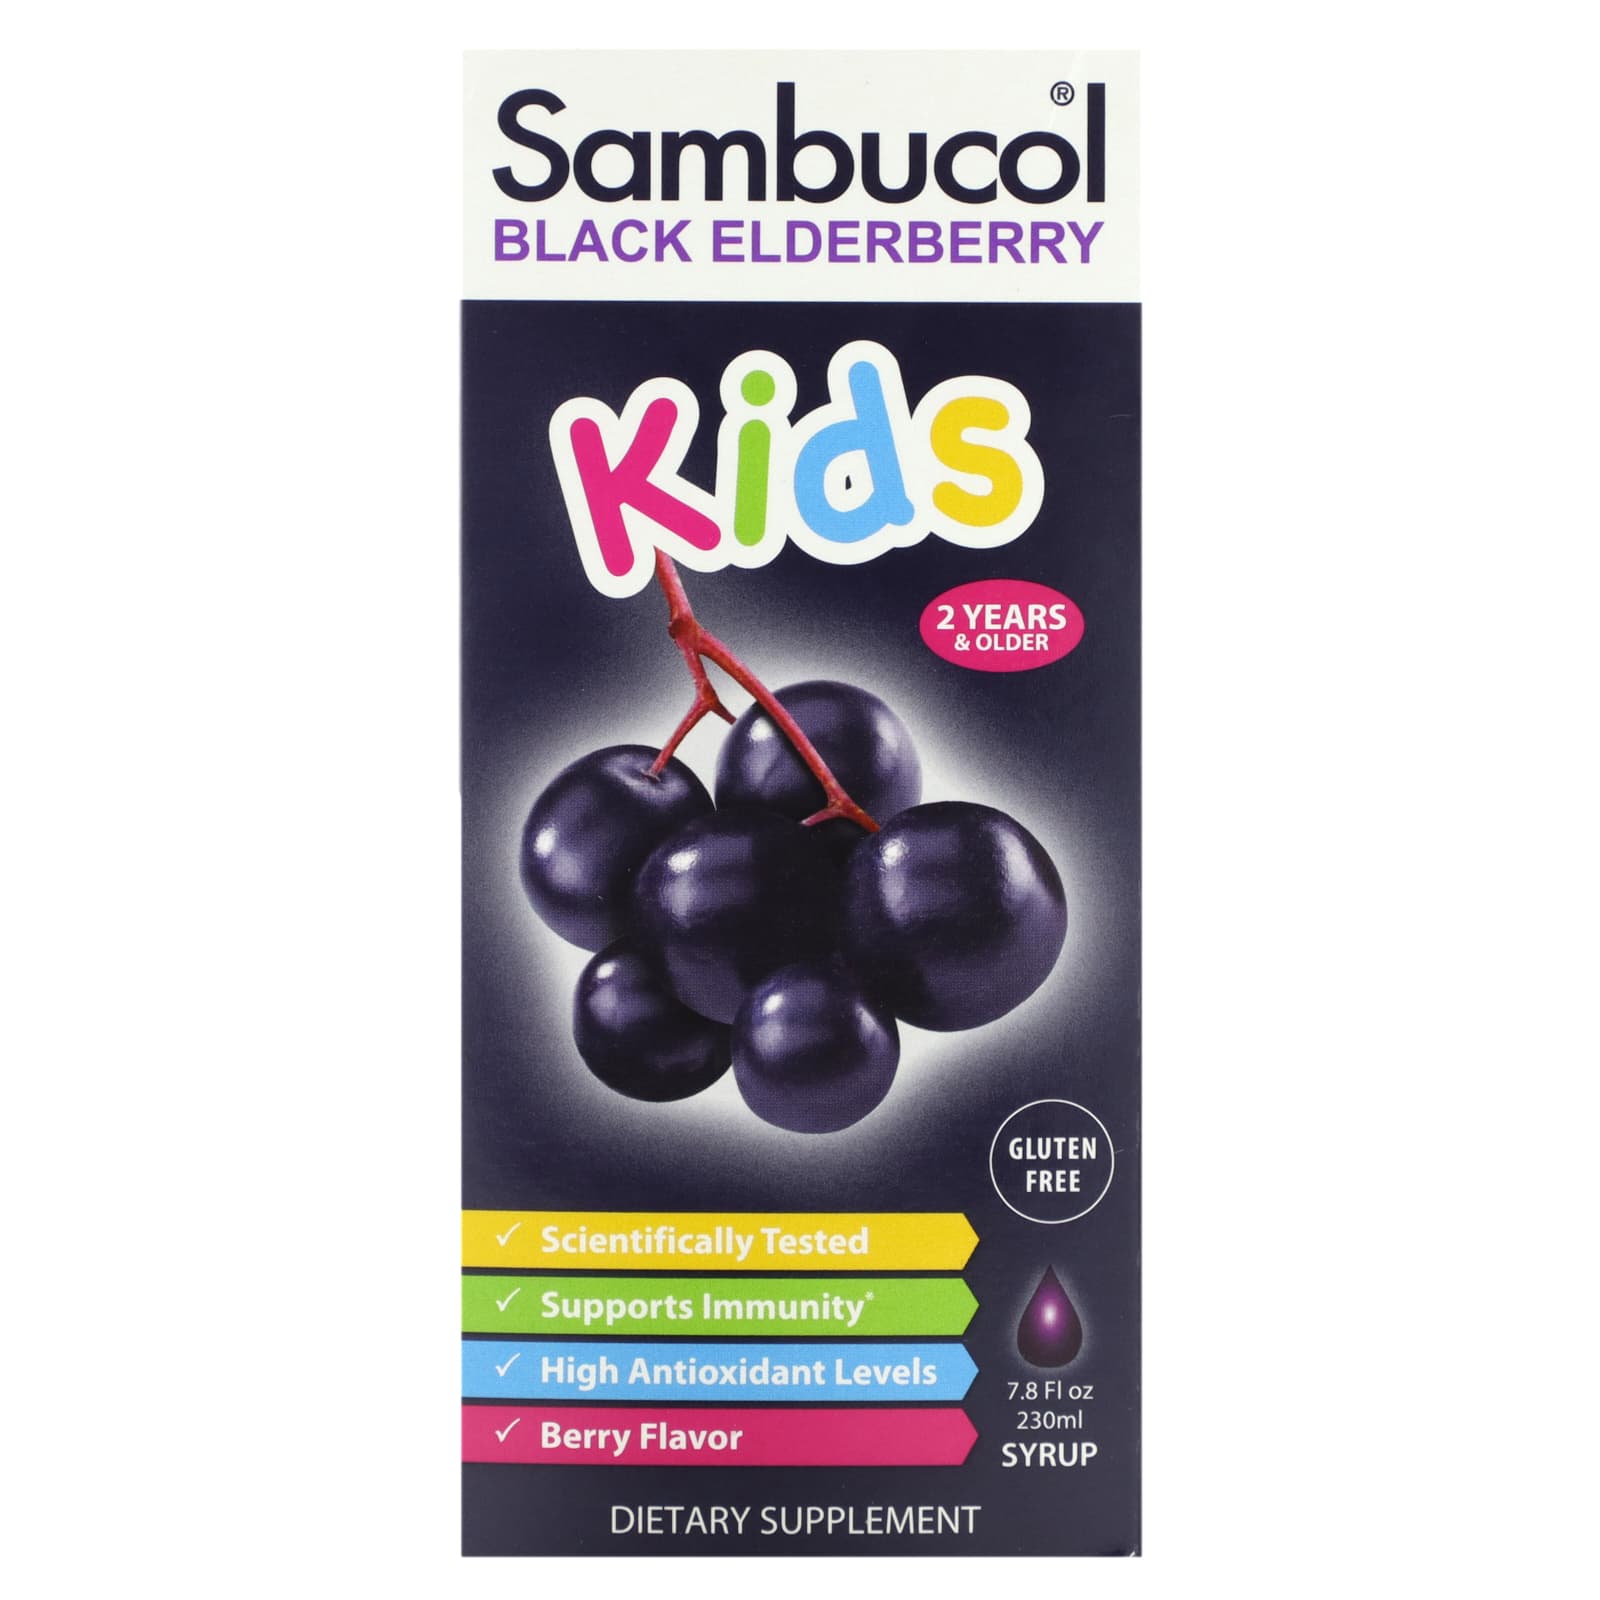 Sambucol-Kids-Black Elderberry Syrup-2 Years & Older-Berry-7.8 fl oz (230 ml)